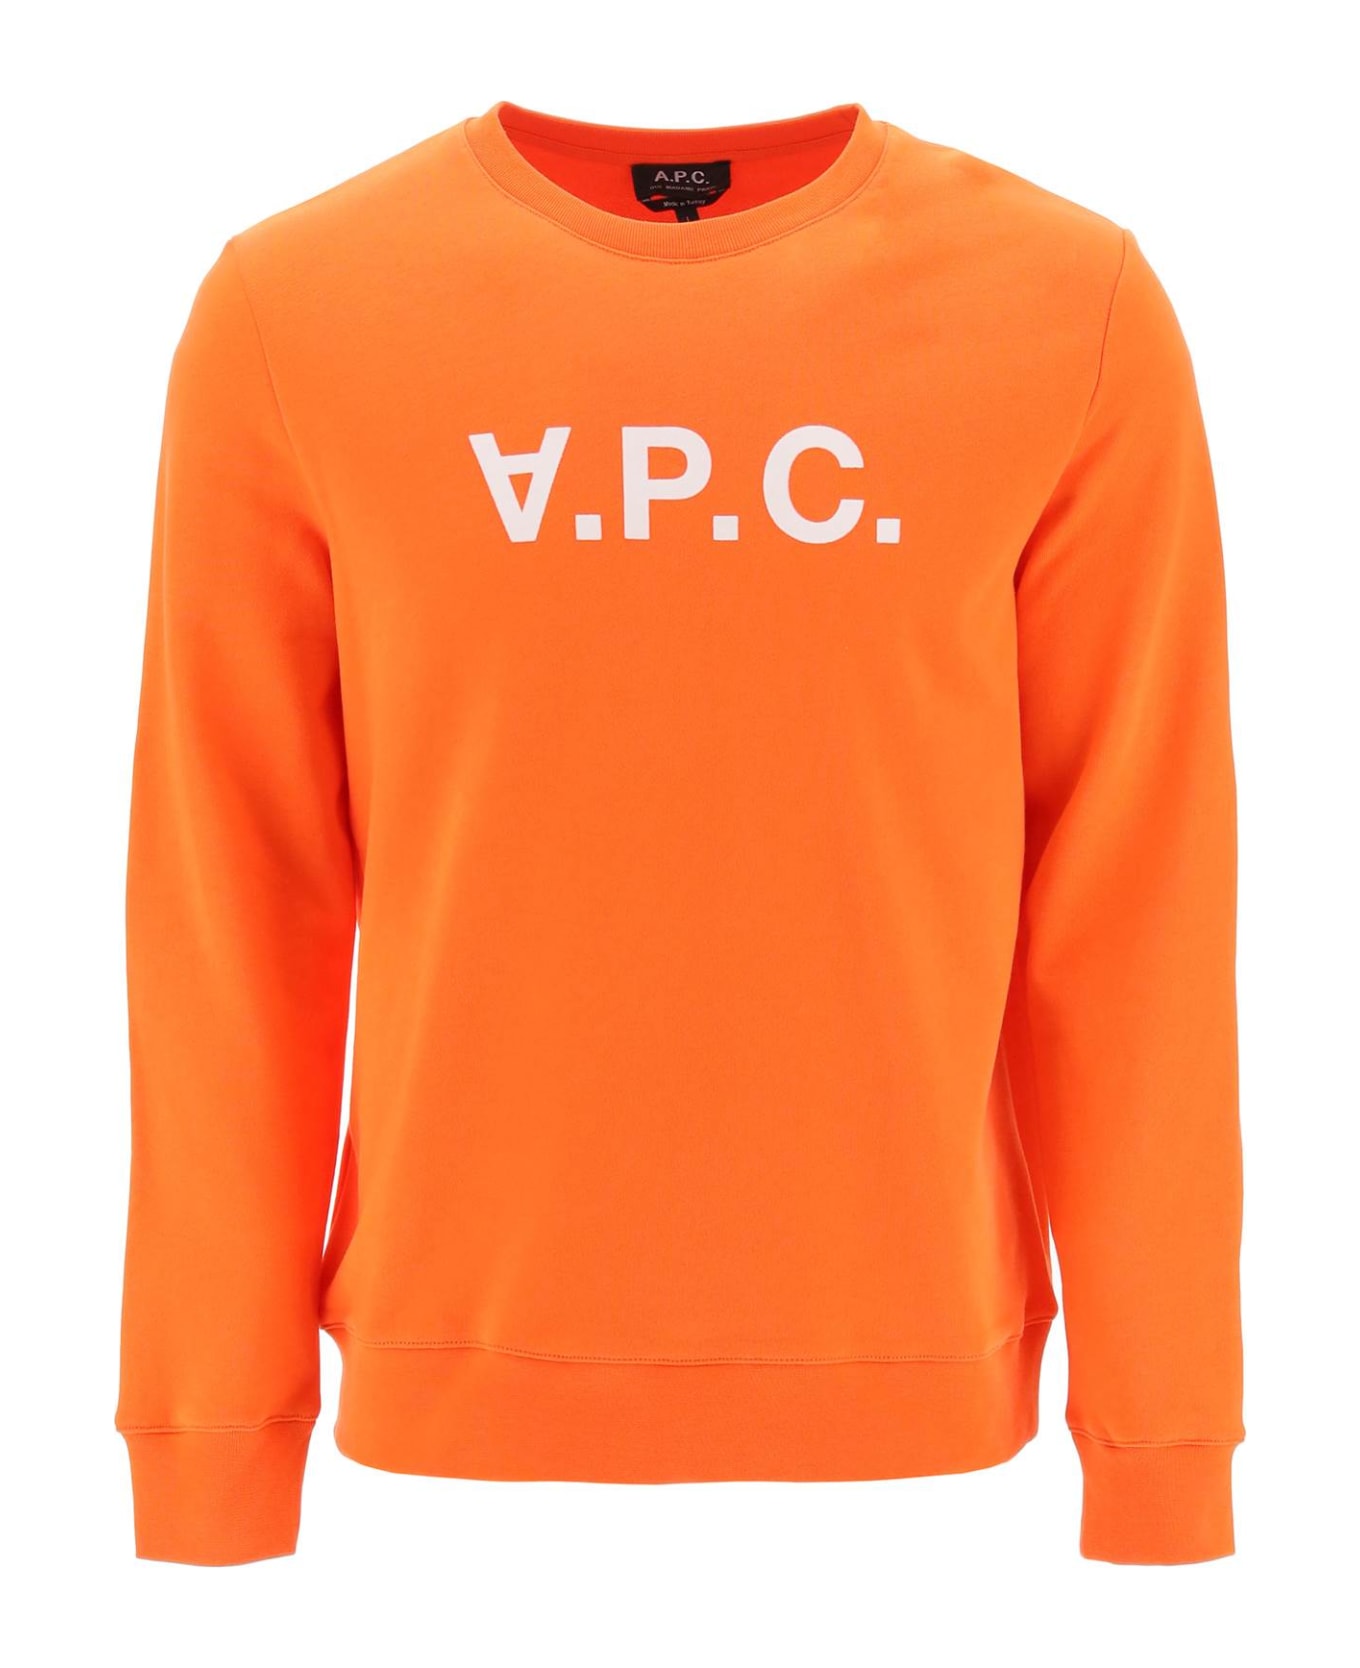 A.P.C. Sweatshirt With Logo - Orange